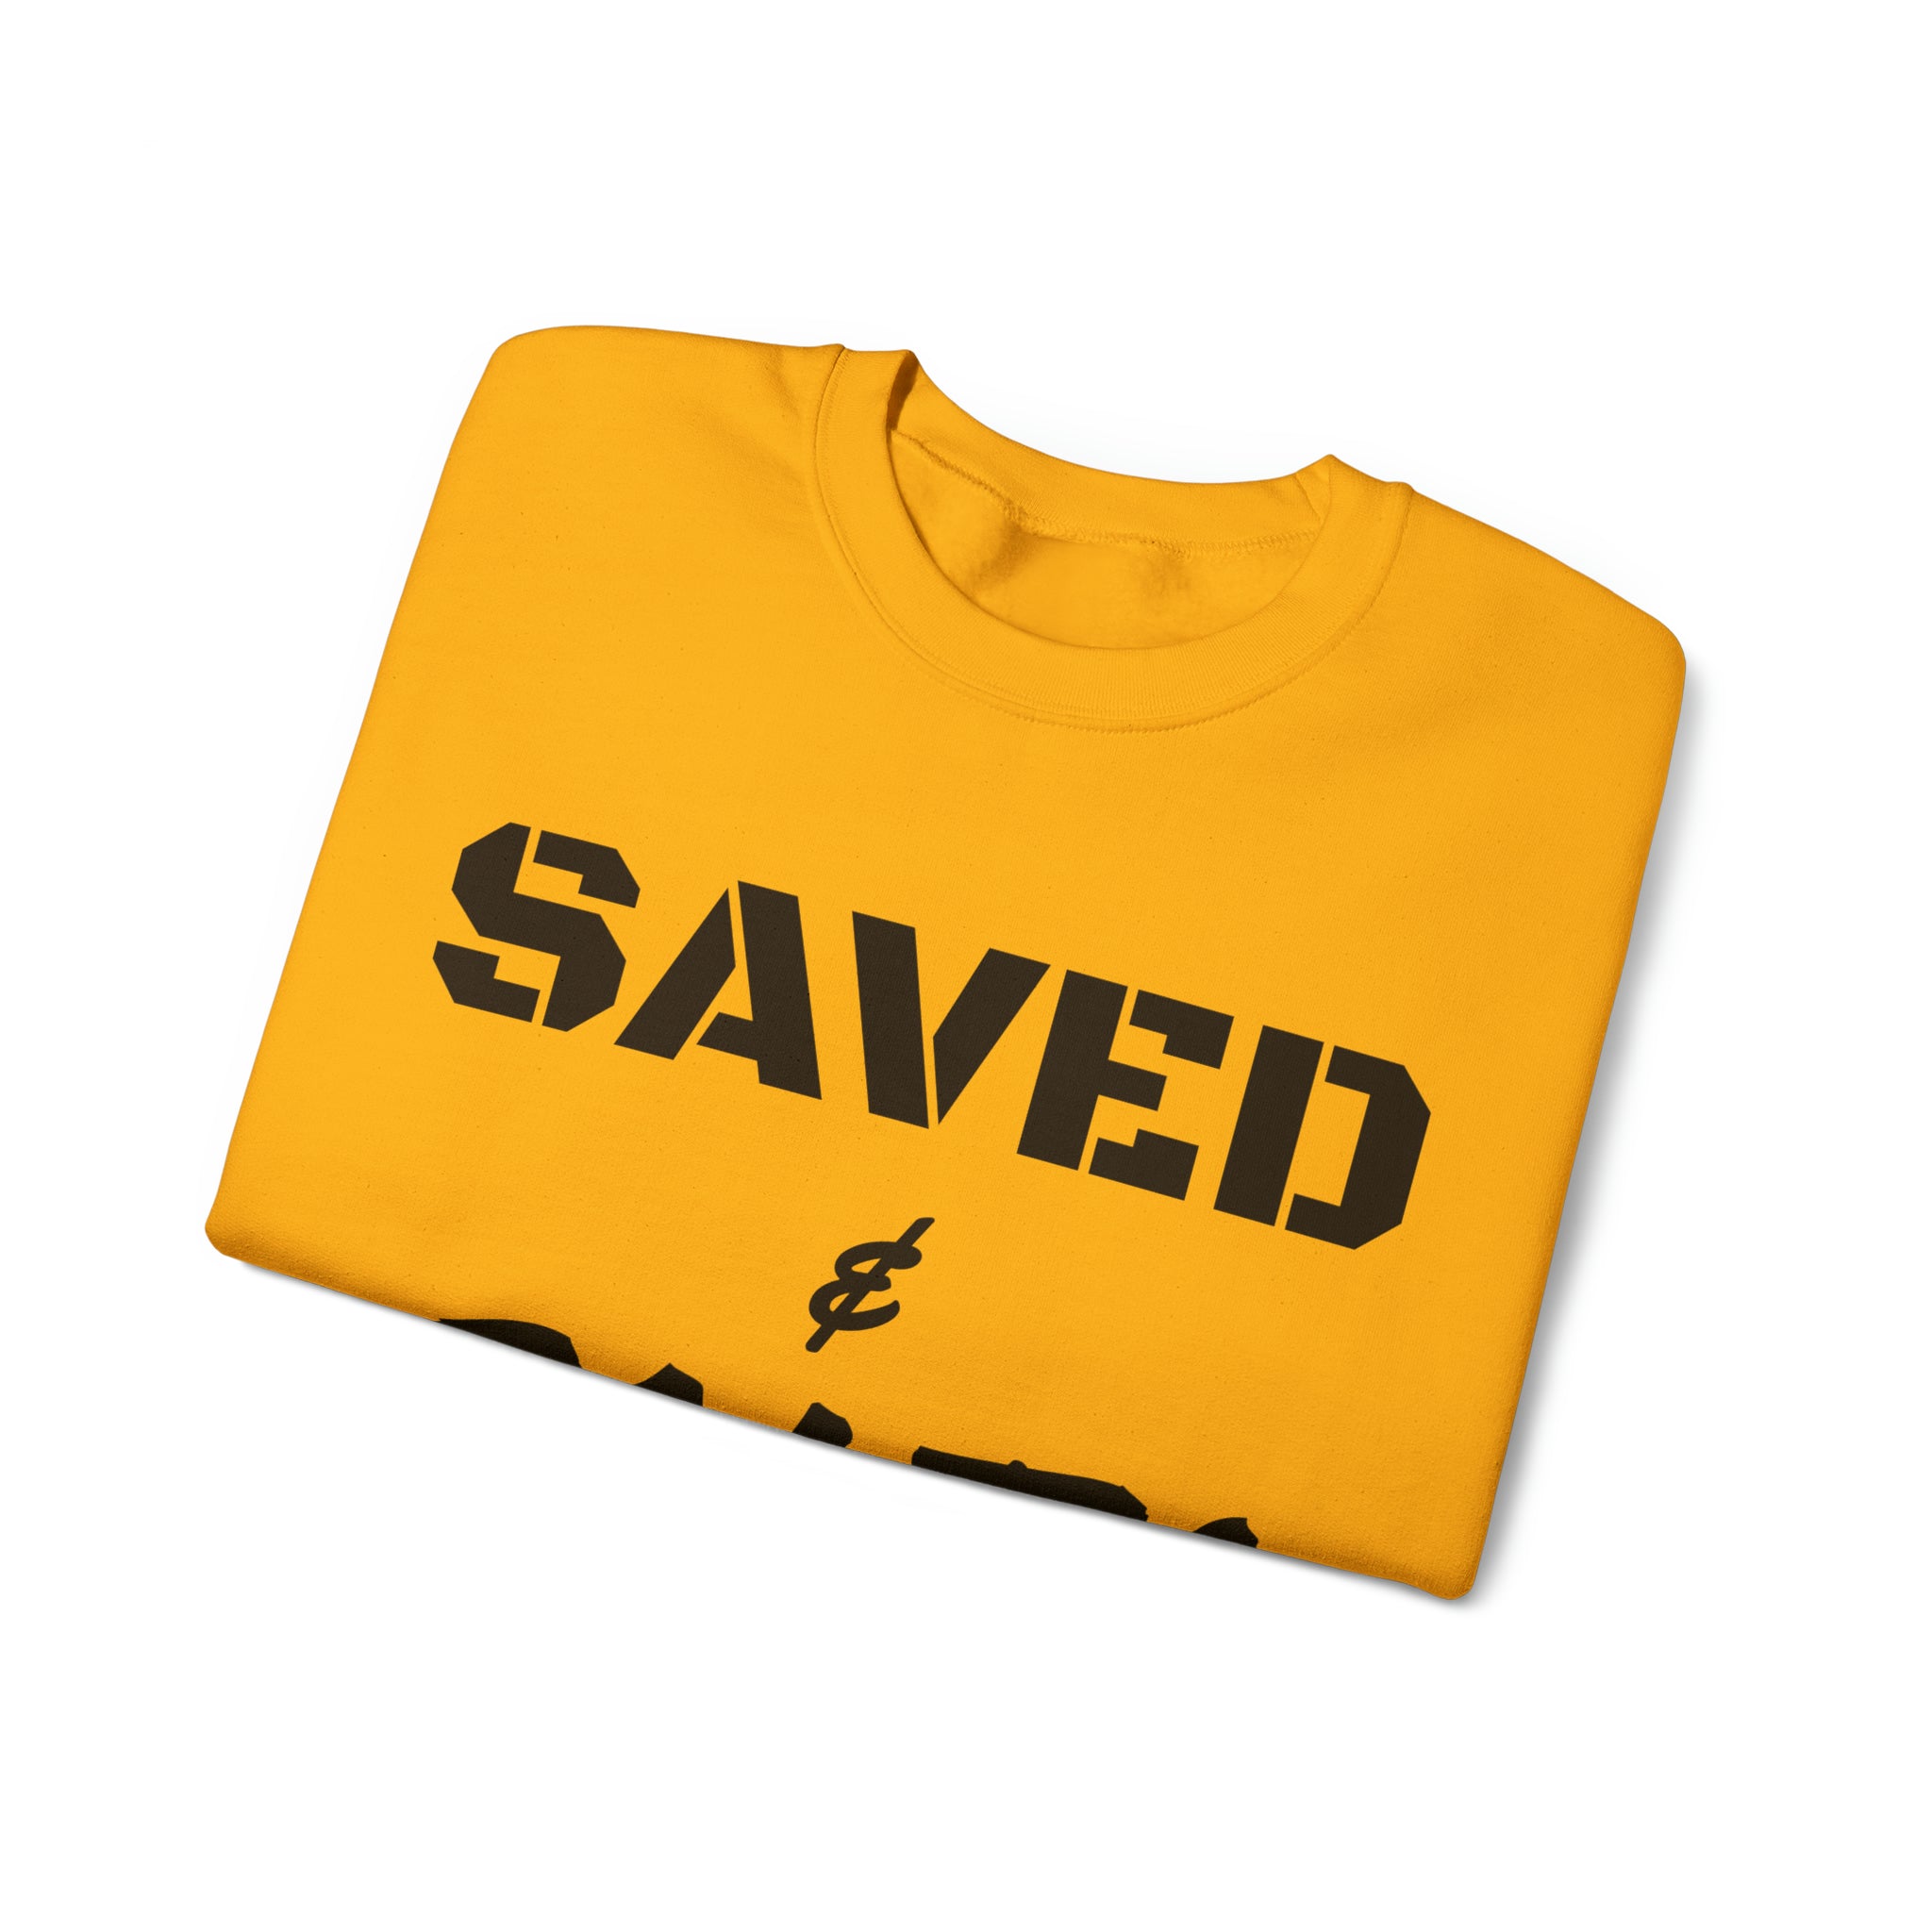 #Saved&Salty #Unisex Heavy Blend™ Crewneck #Sweatshirt